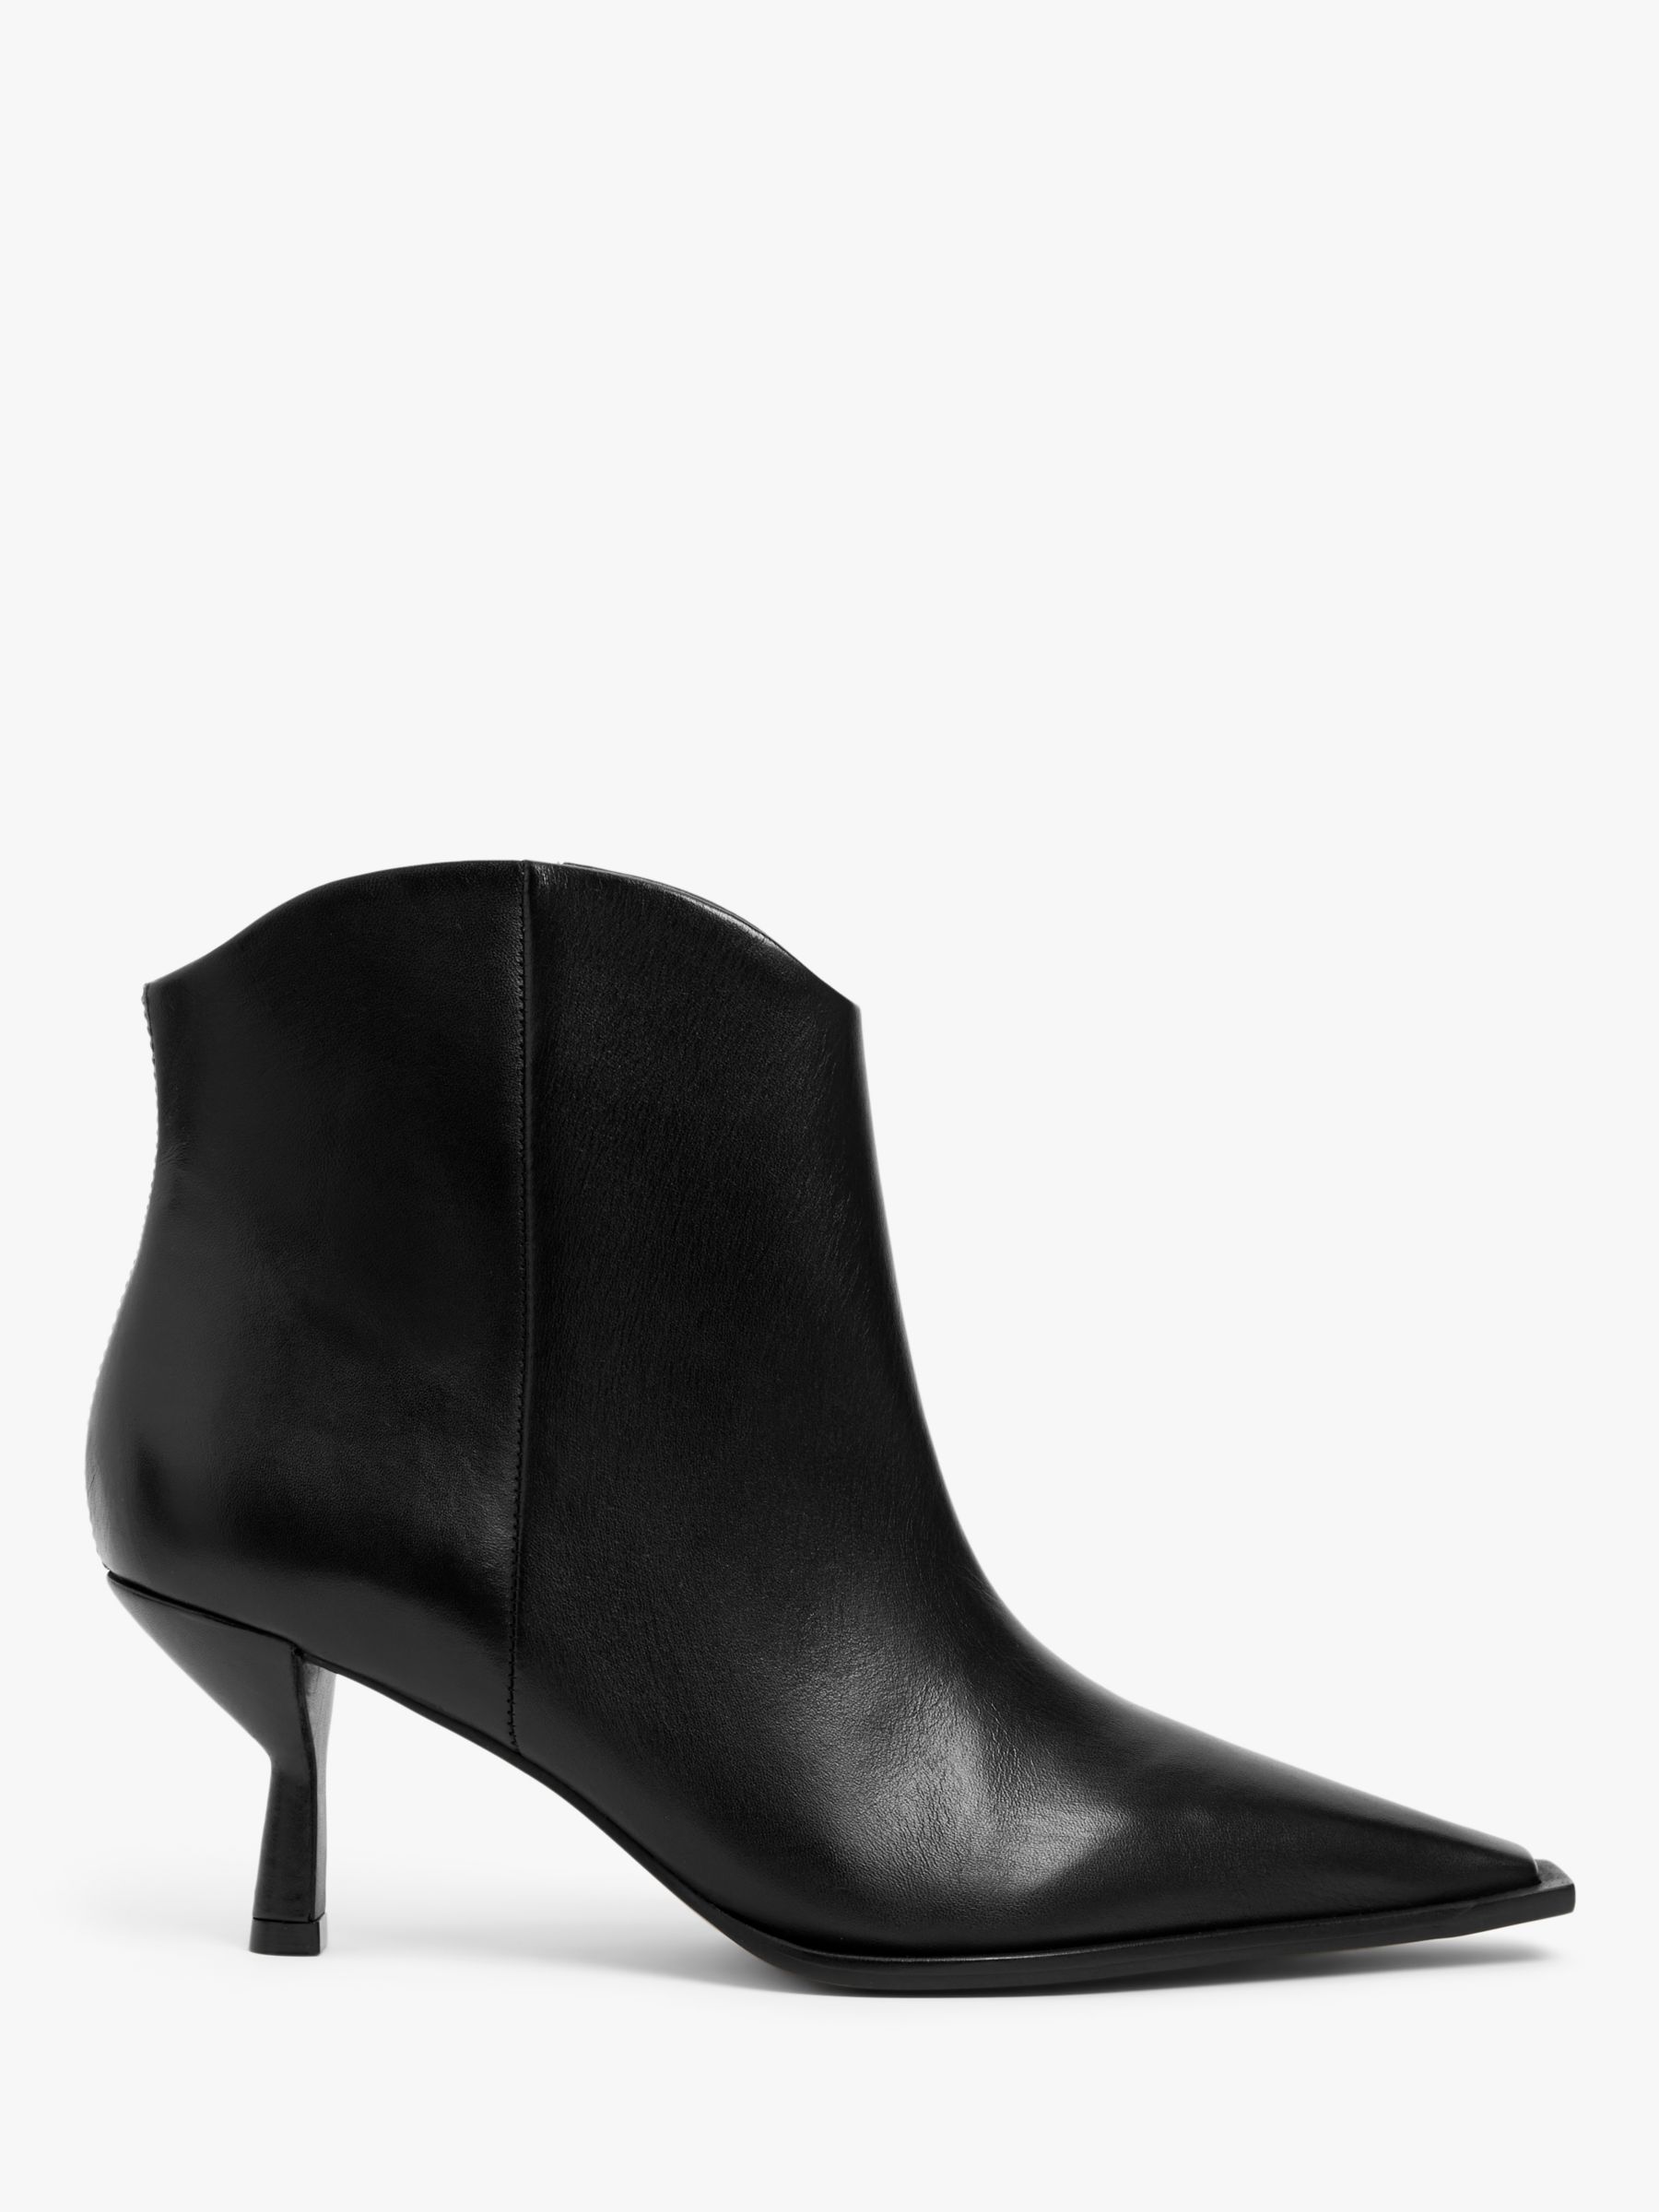 John Lewis Panama Leather Dressy Western Ankle Boots, Black, 6